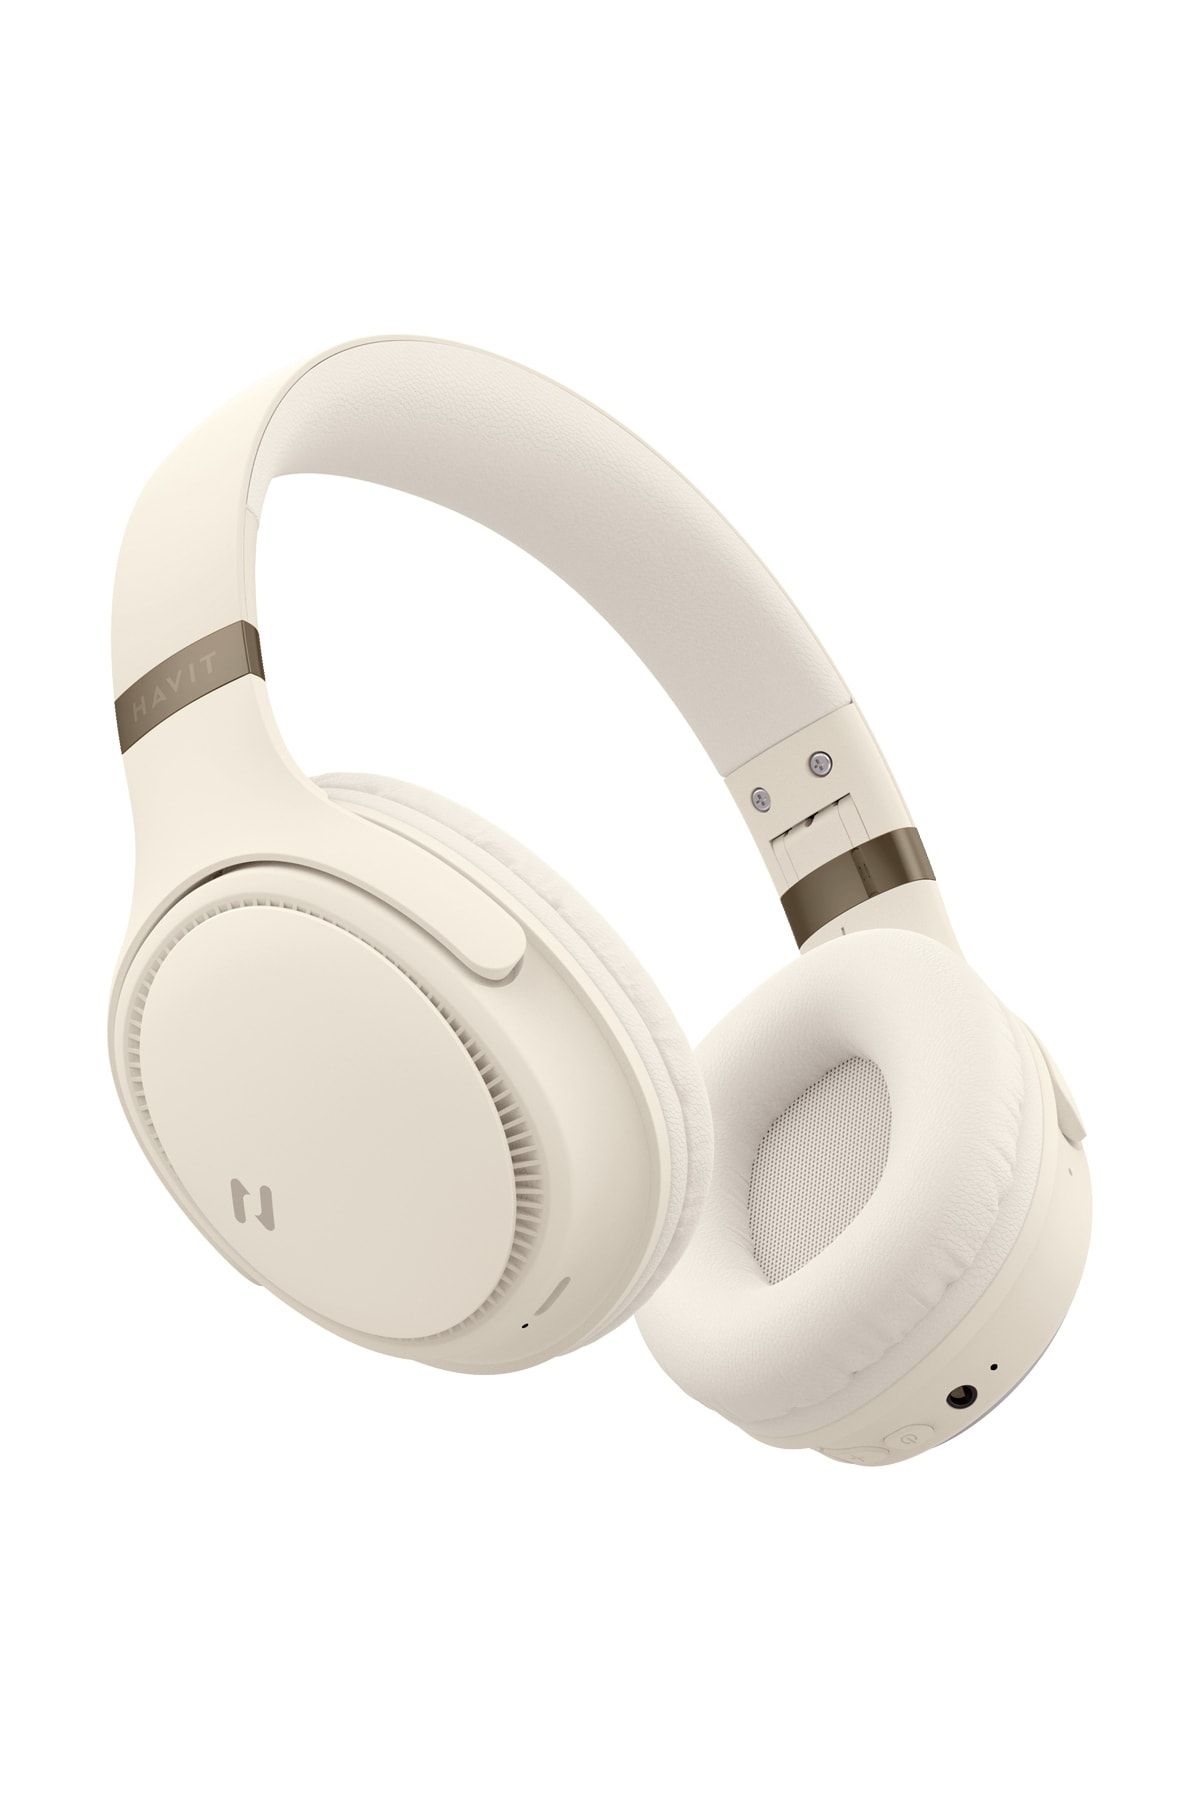 Havit H630BT Katlanabilir Kafa Üstü Mikrofonlu Bluetooth Kulaklık - 36 Saat Kullanım Bluetooth V5.3